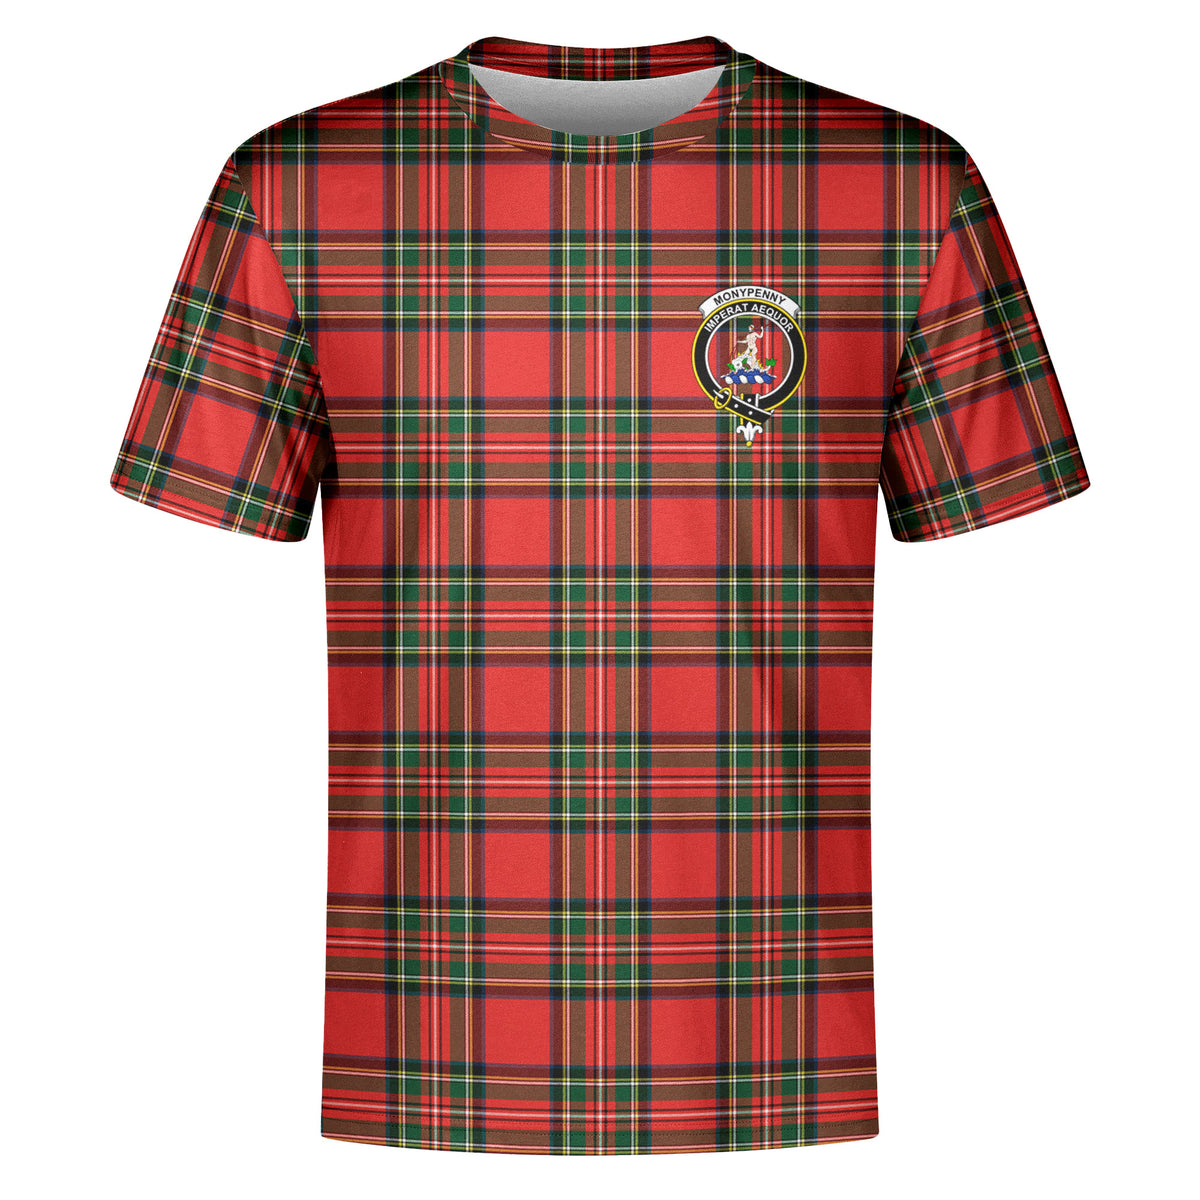 Monypenny Tartan Crest T-shirt